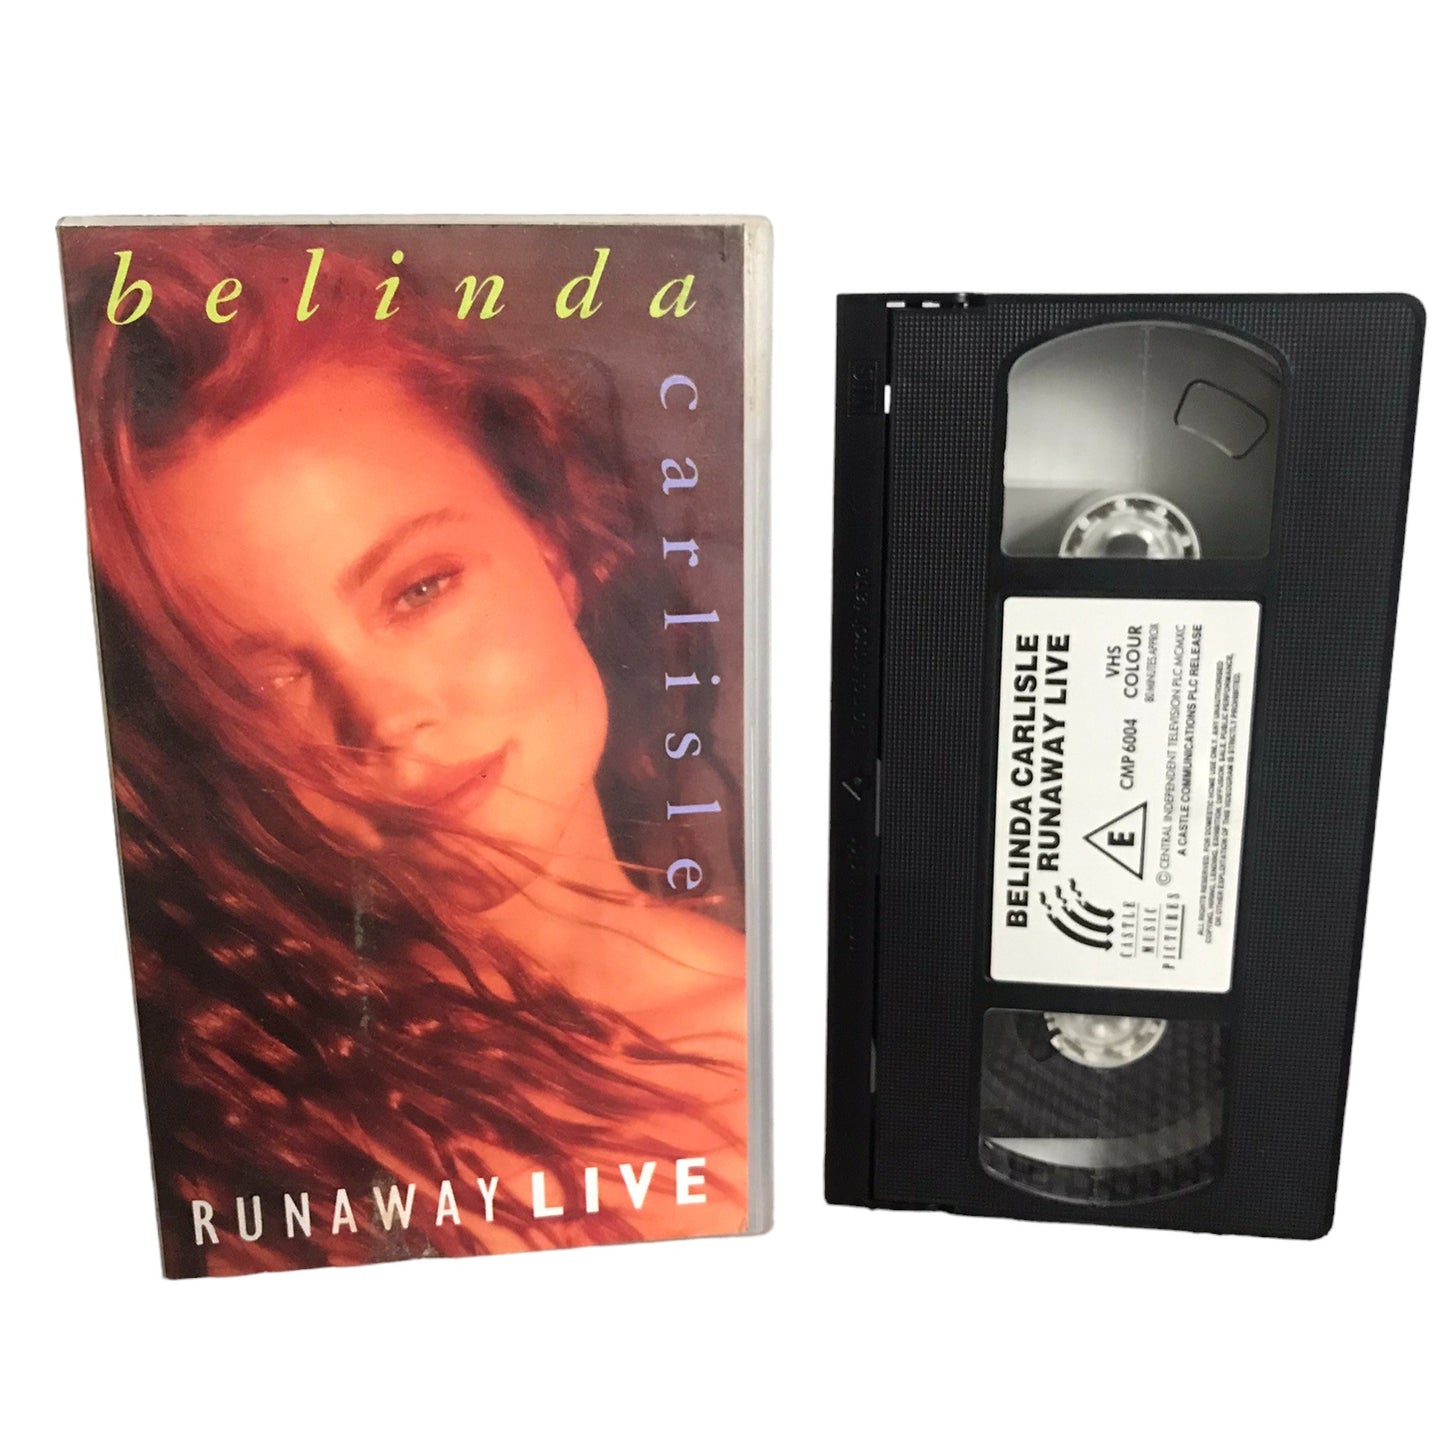 Belinda Carlisle Runaway Live - Sachi McHenry - Castle Music Pictures - Music - Pal - VHS-